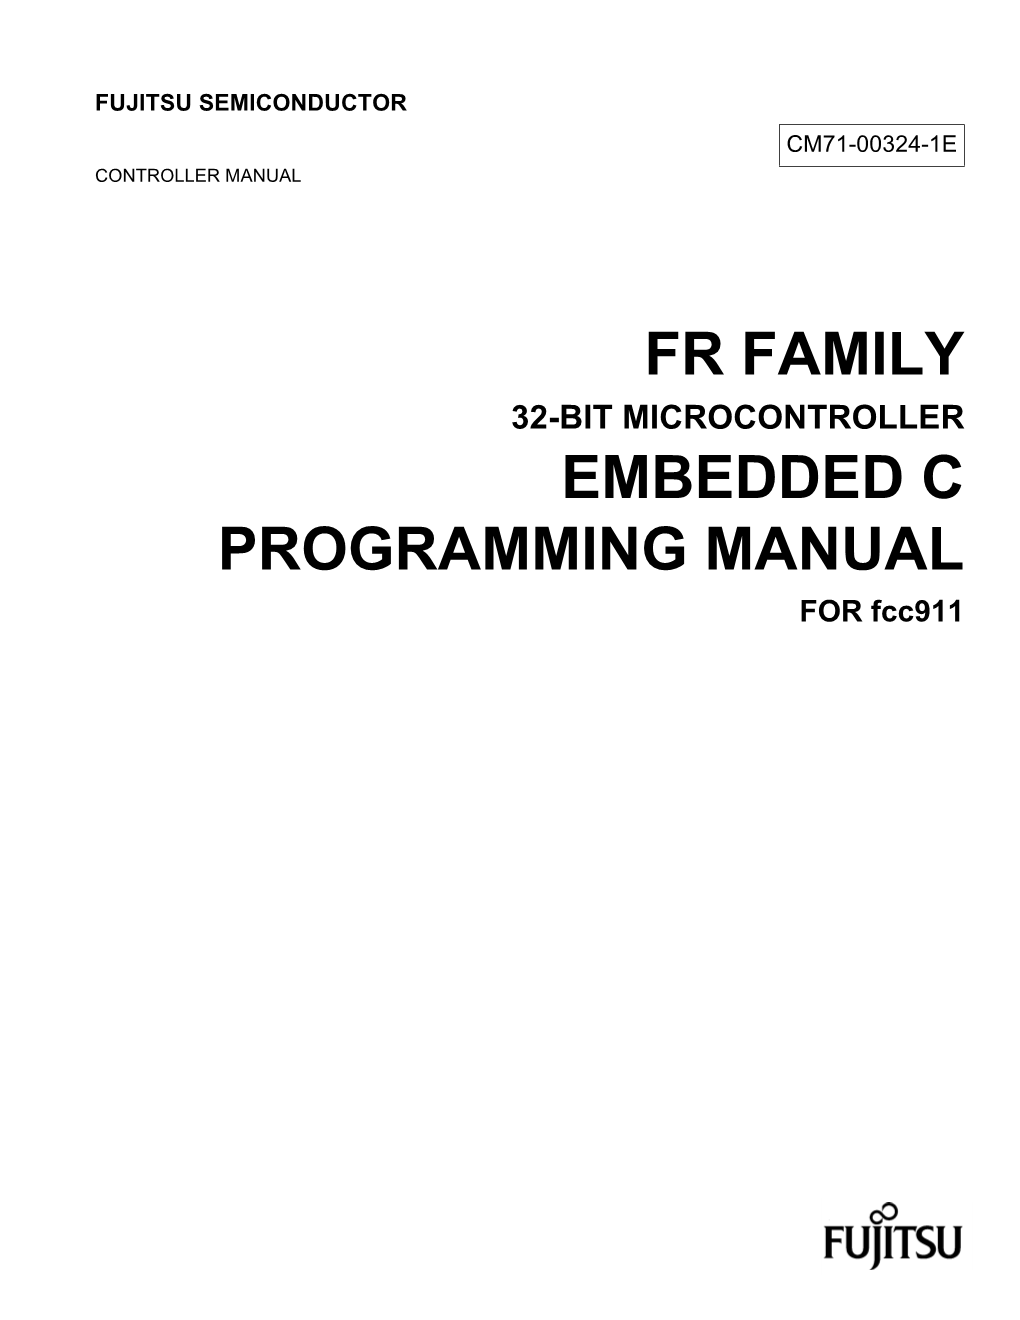 Fr Family Embedded C Programming Manual